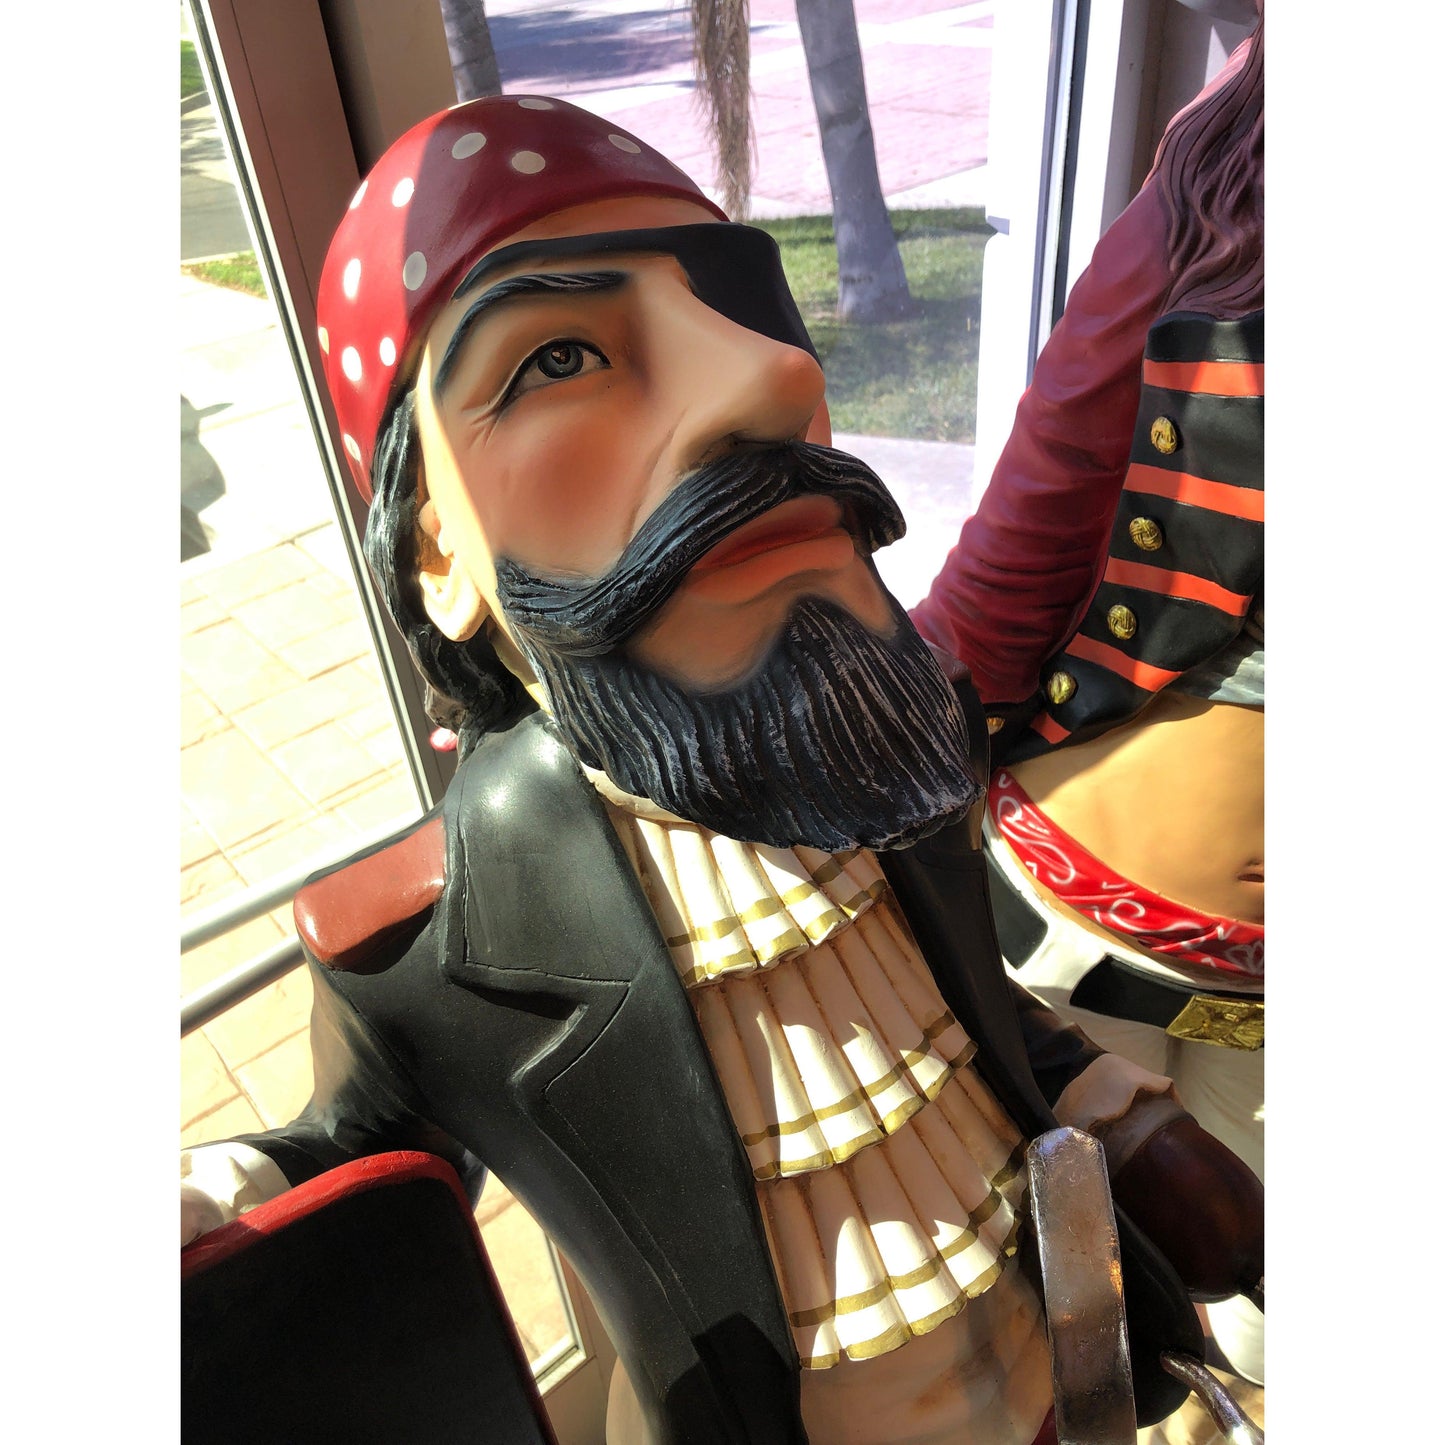 Pirate Holding Menu Board Life Size Statue - LM Treasures Prop Rentals 